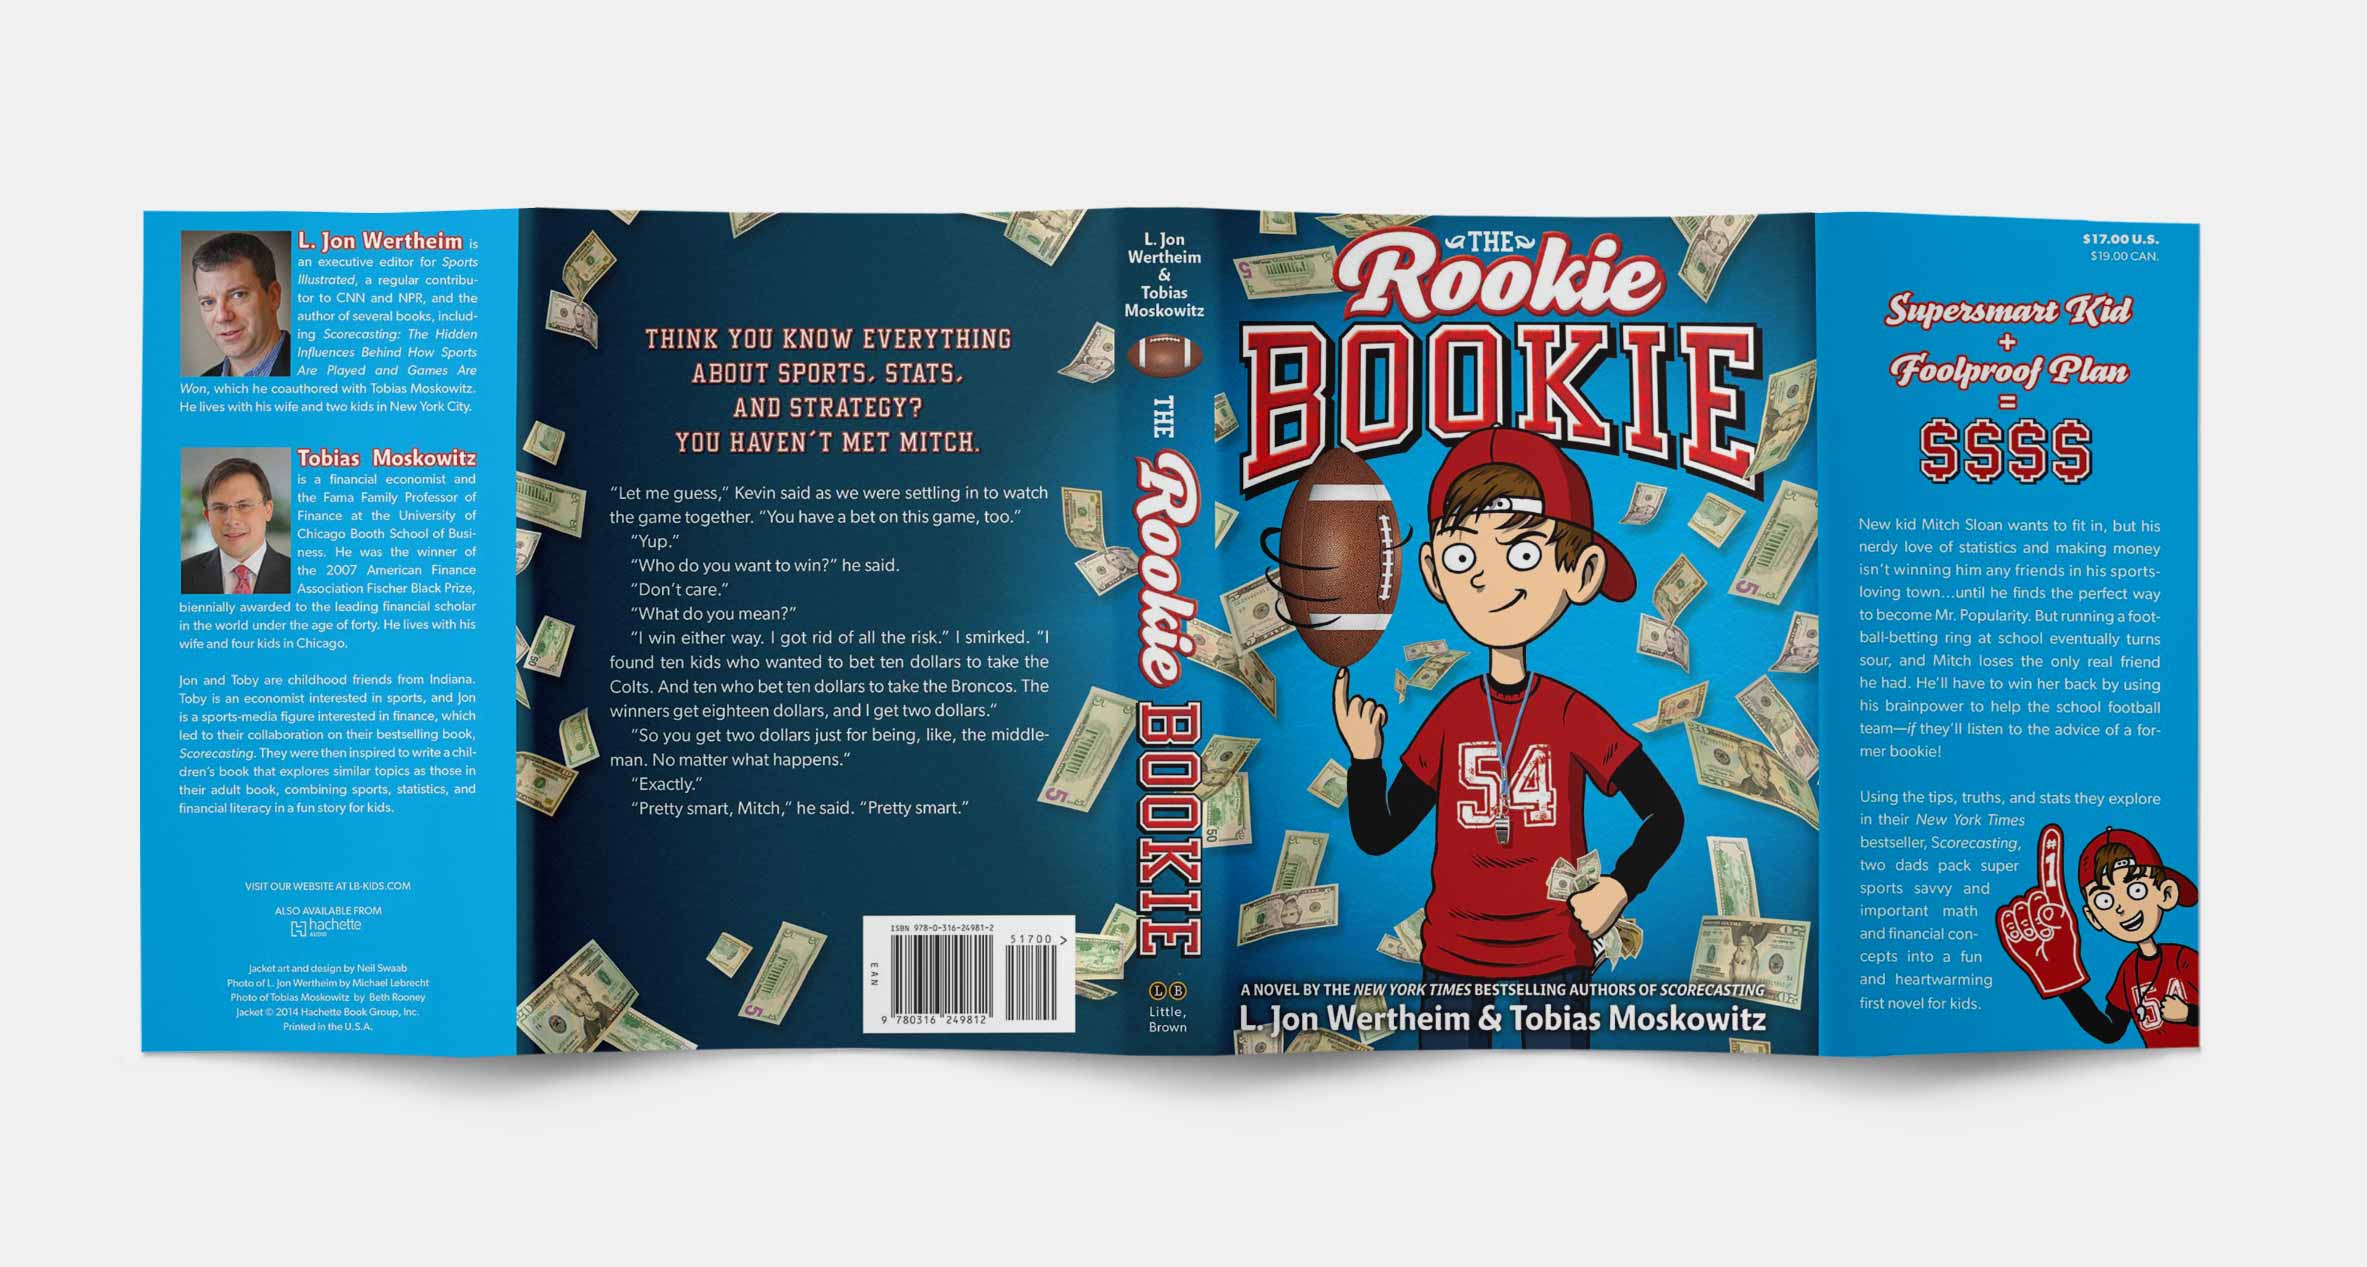 RookieBookie-jacket